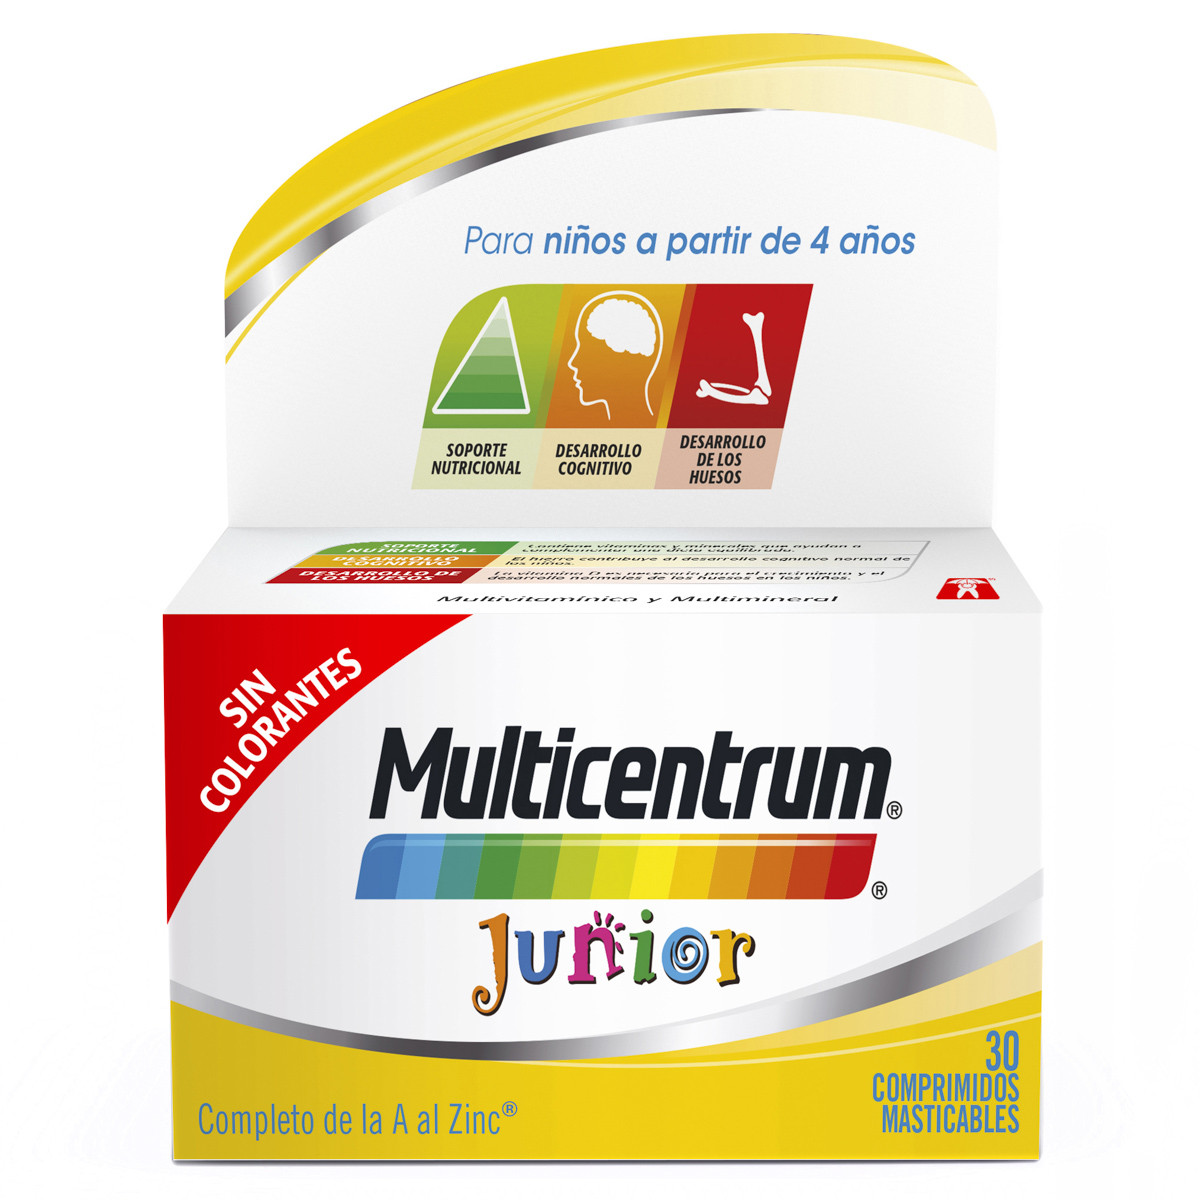 Imagen de Multicentrum junior 30 comprimidos masticables